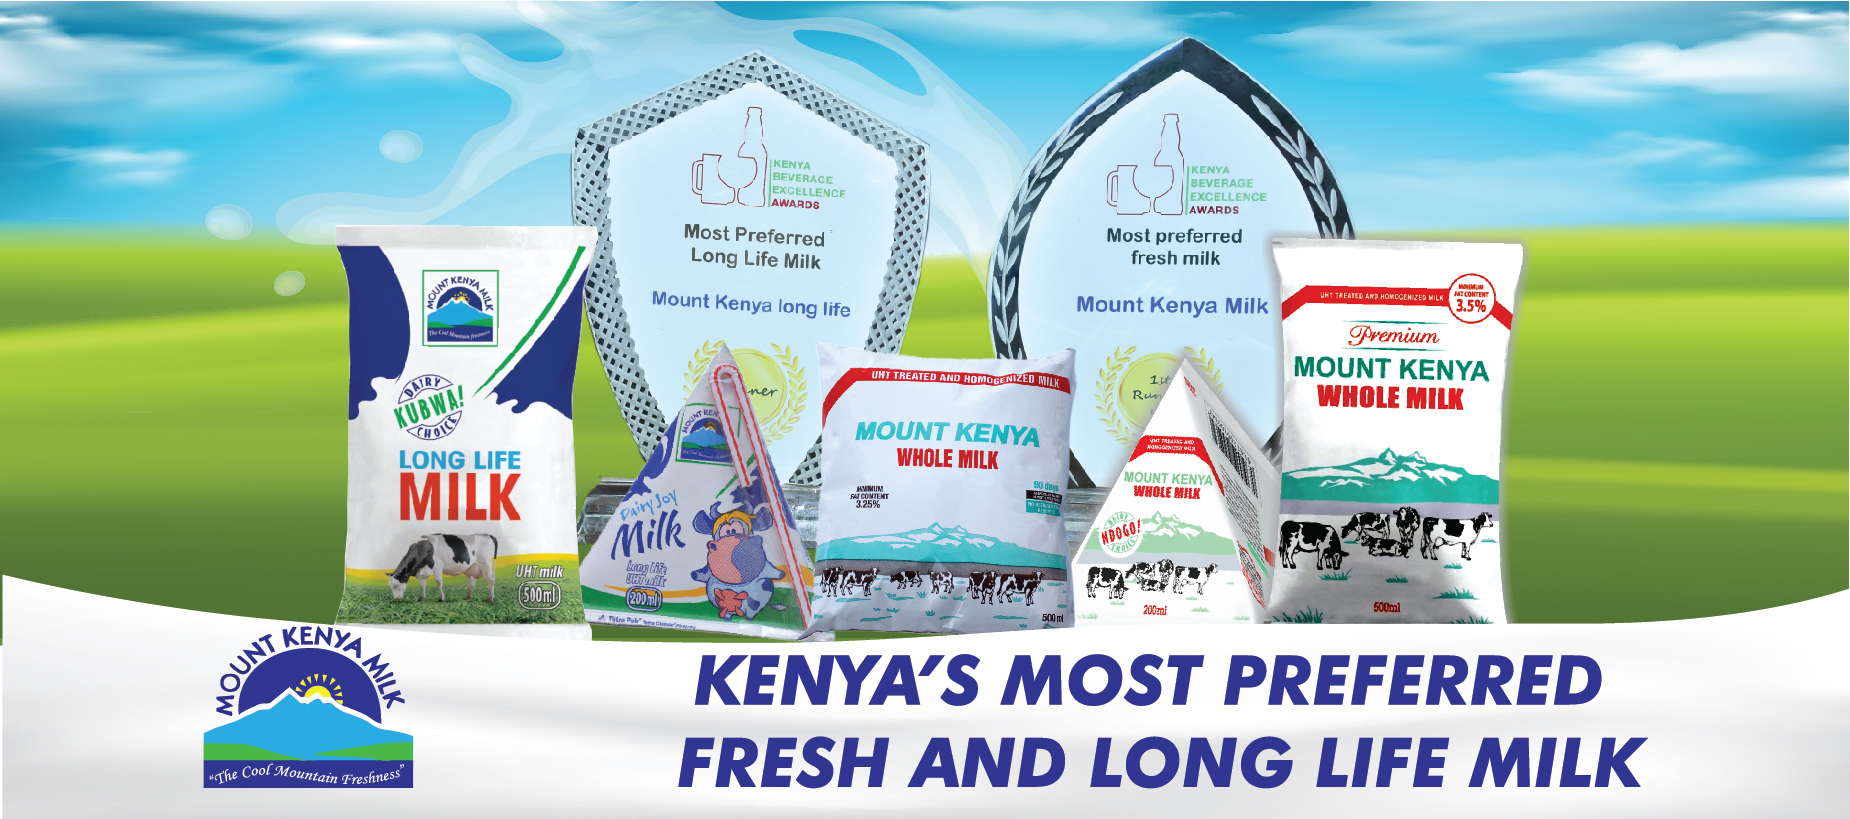 Mount Kenya Milk – The Cool Mountain Freshness